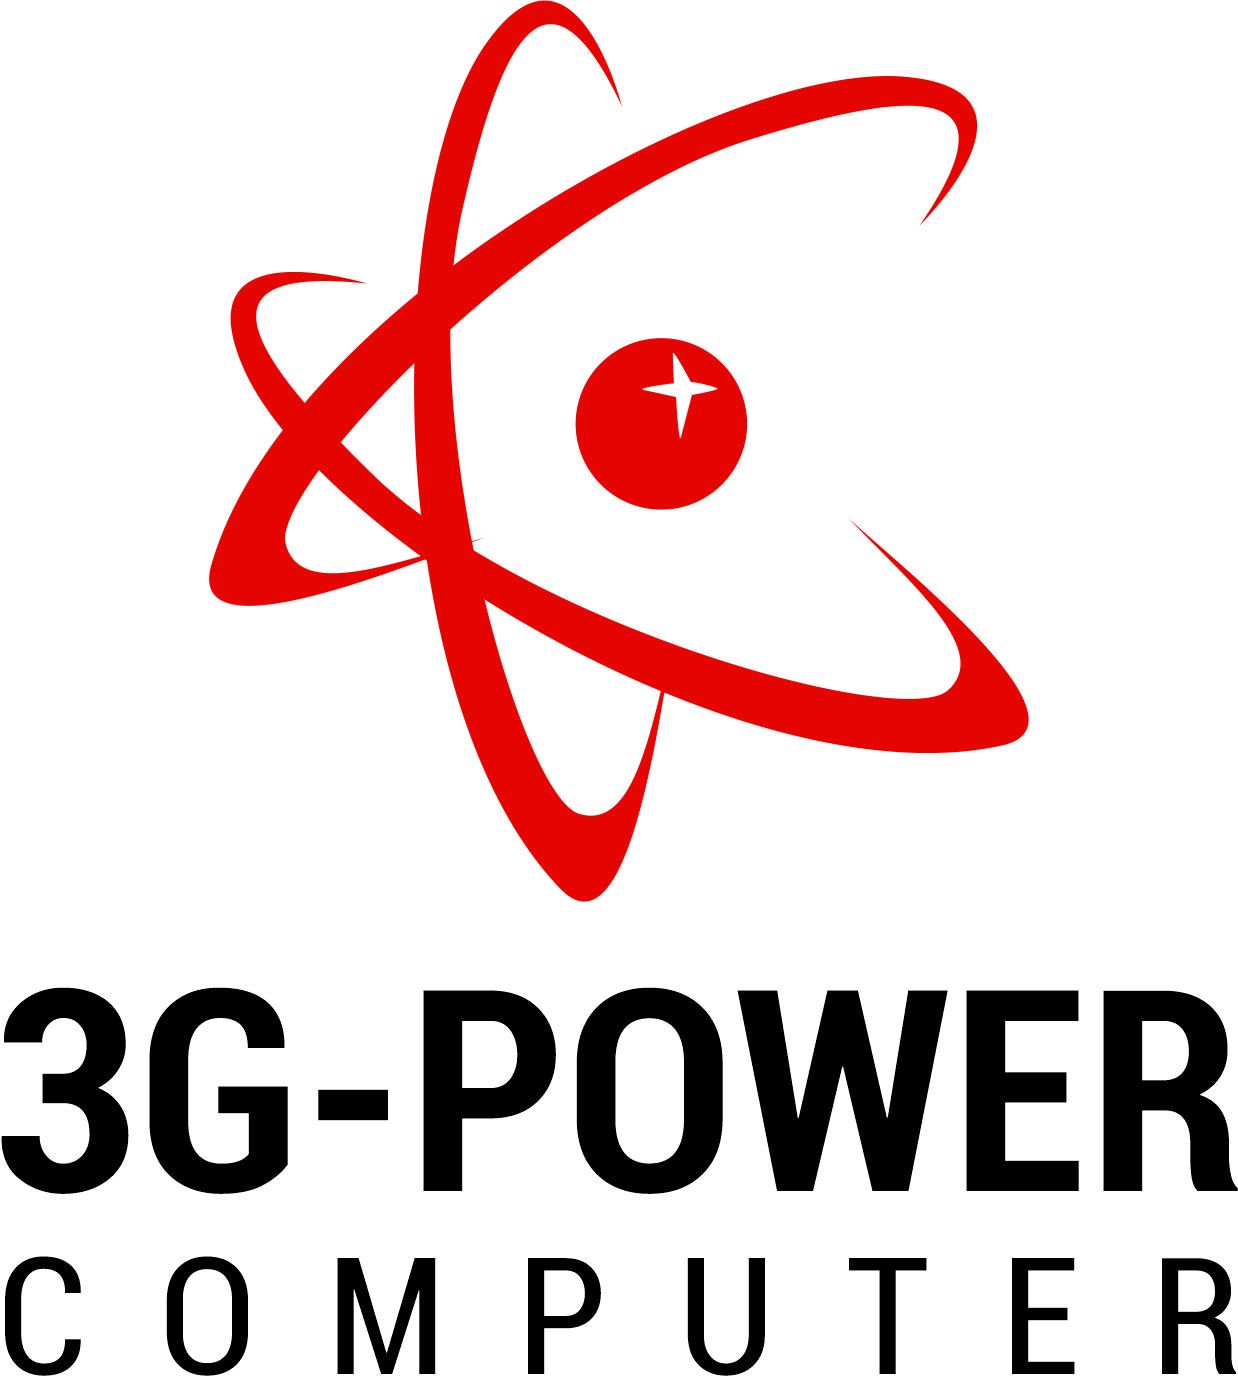 Pt. Infokom Putra Prima (3g Power Computer)